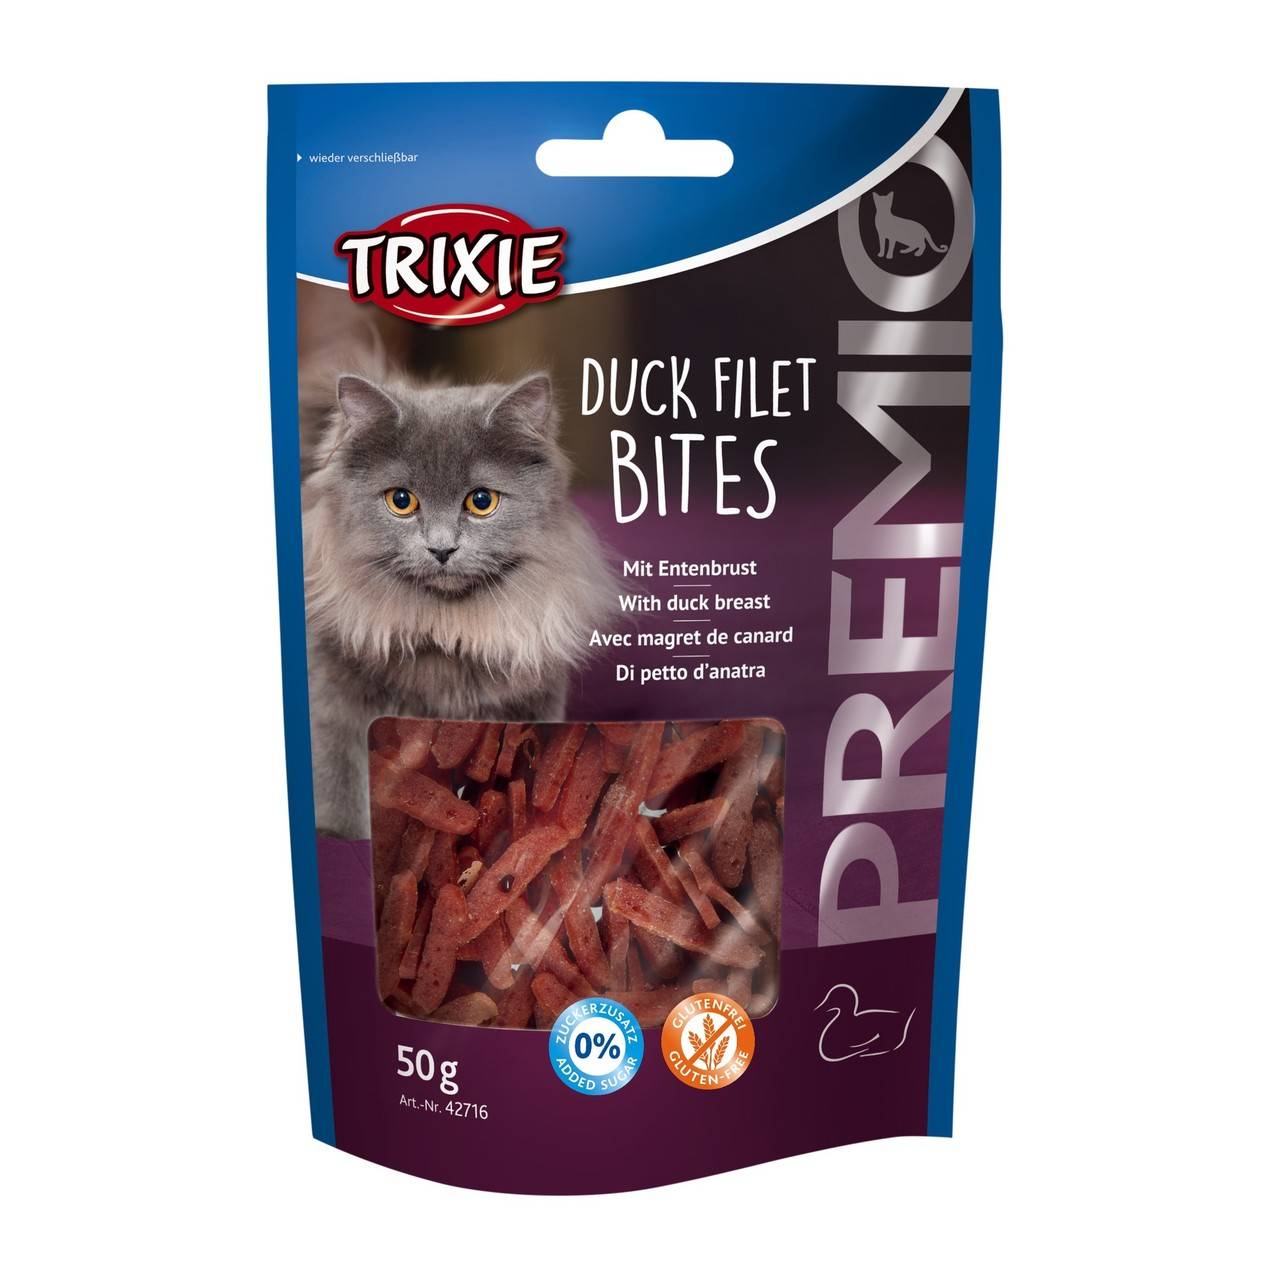 Trixie Premio Duck Filet Bites – ласощі з філе качки для котів